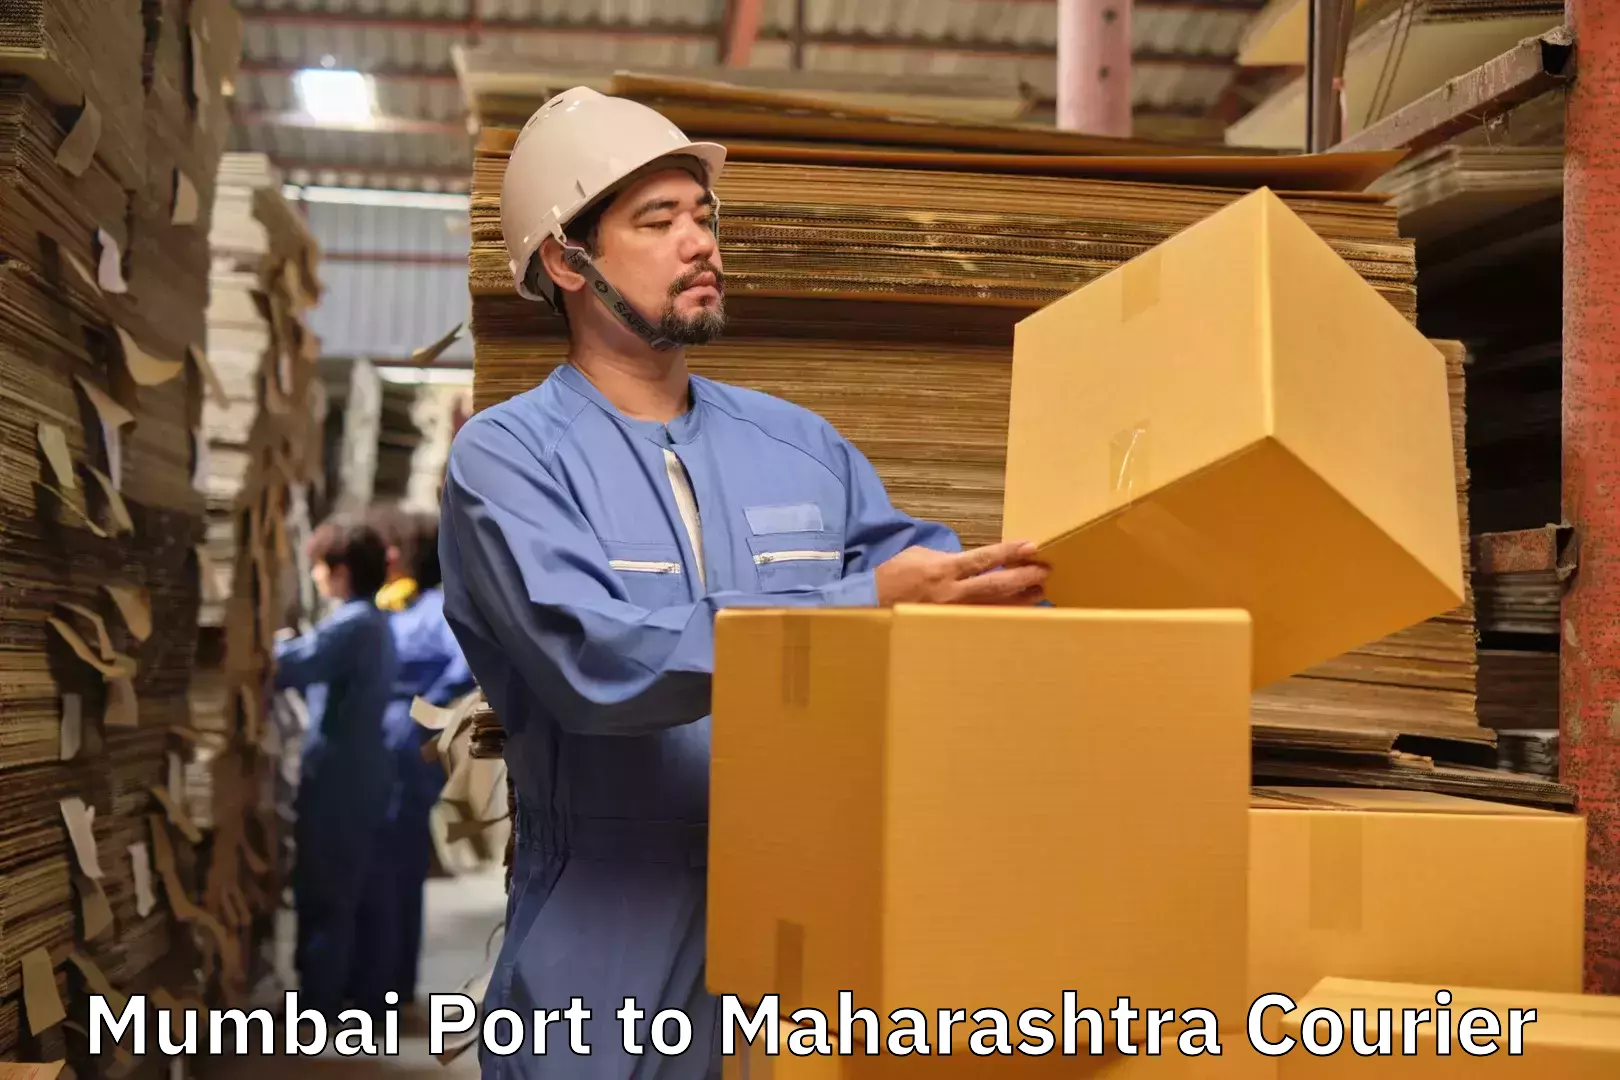 Instant baggage transport quote Mumbai Port to Panvel